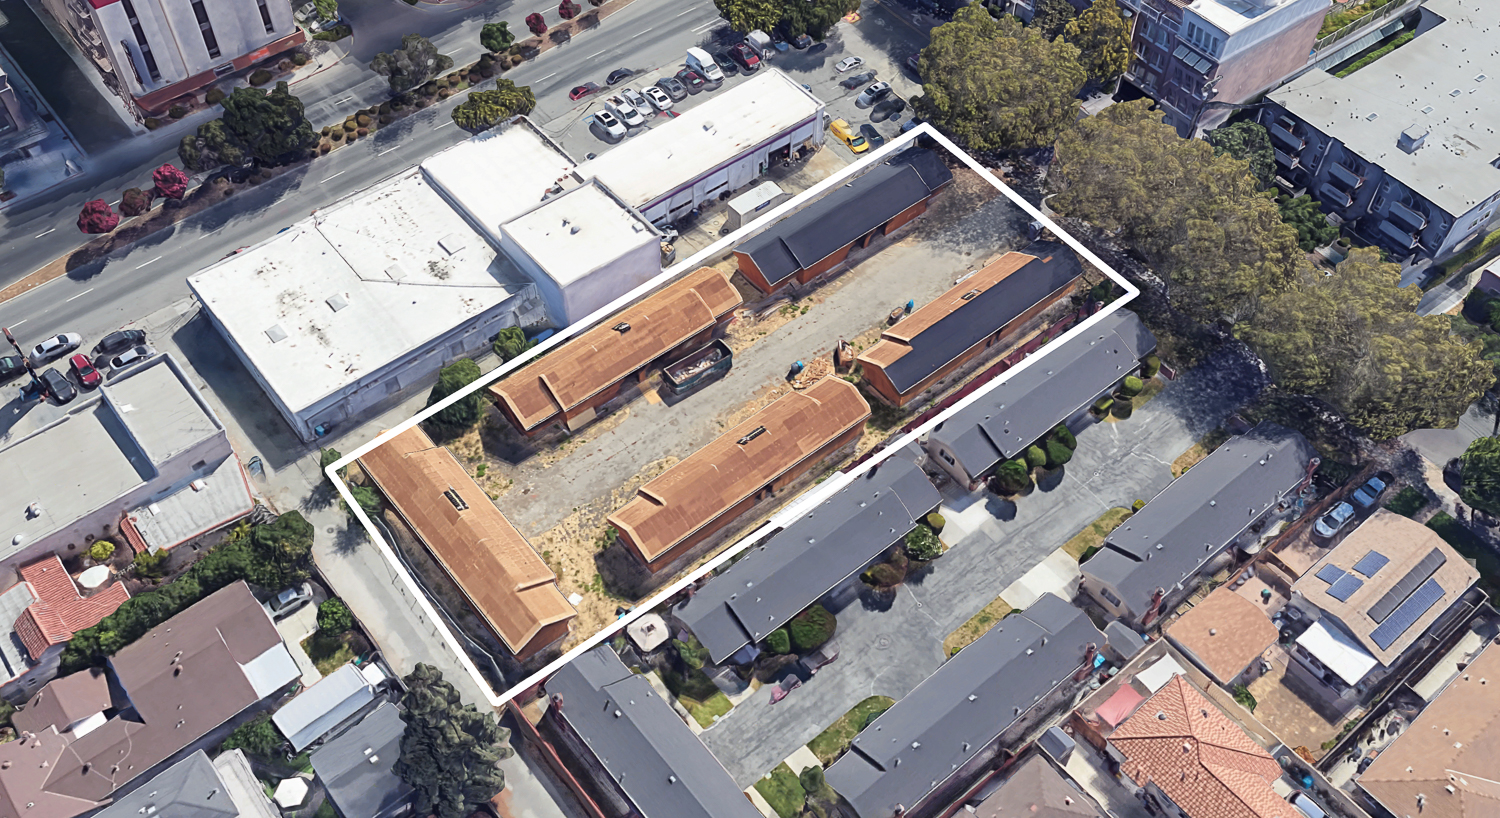 112 Vera Avenue existing condition, image by Google Satellite